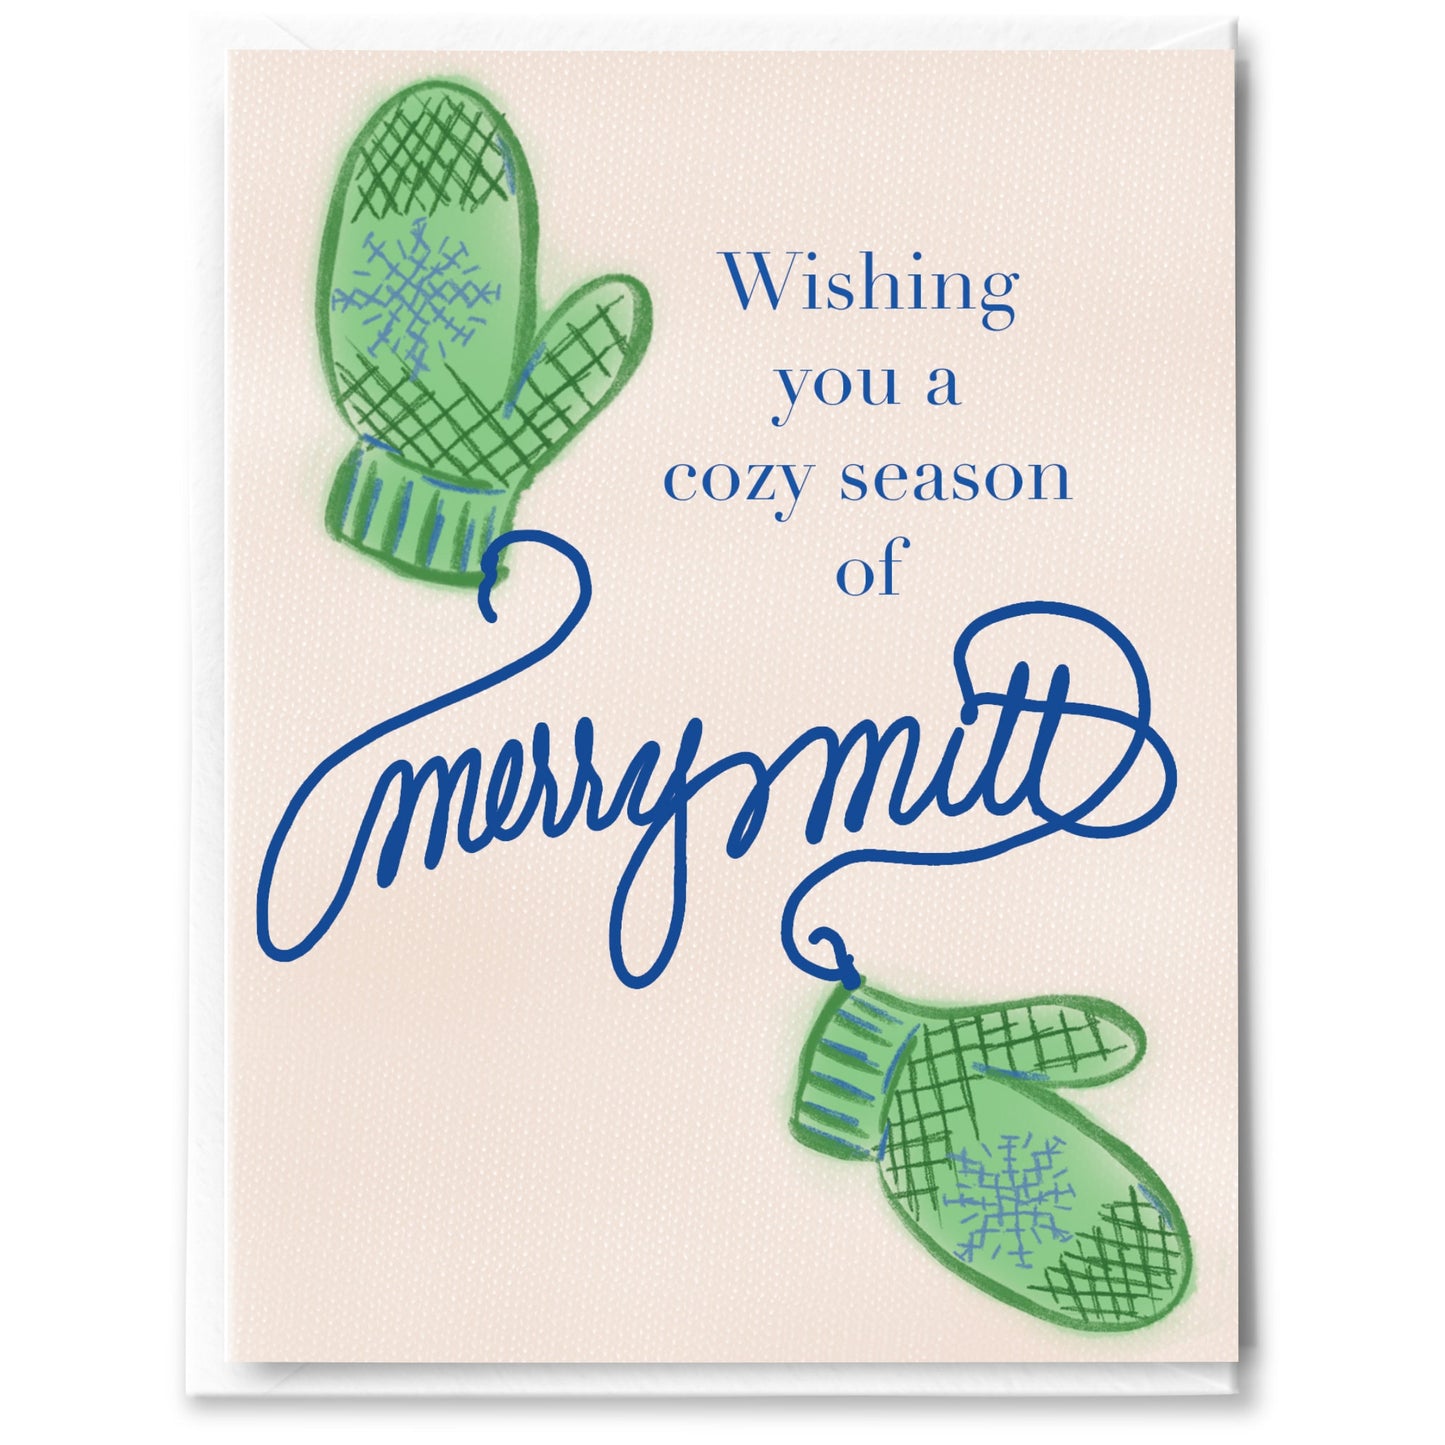 Merry-Mitt Pun Christmas Cards